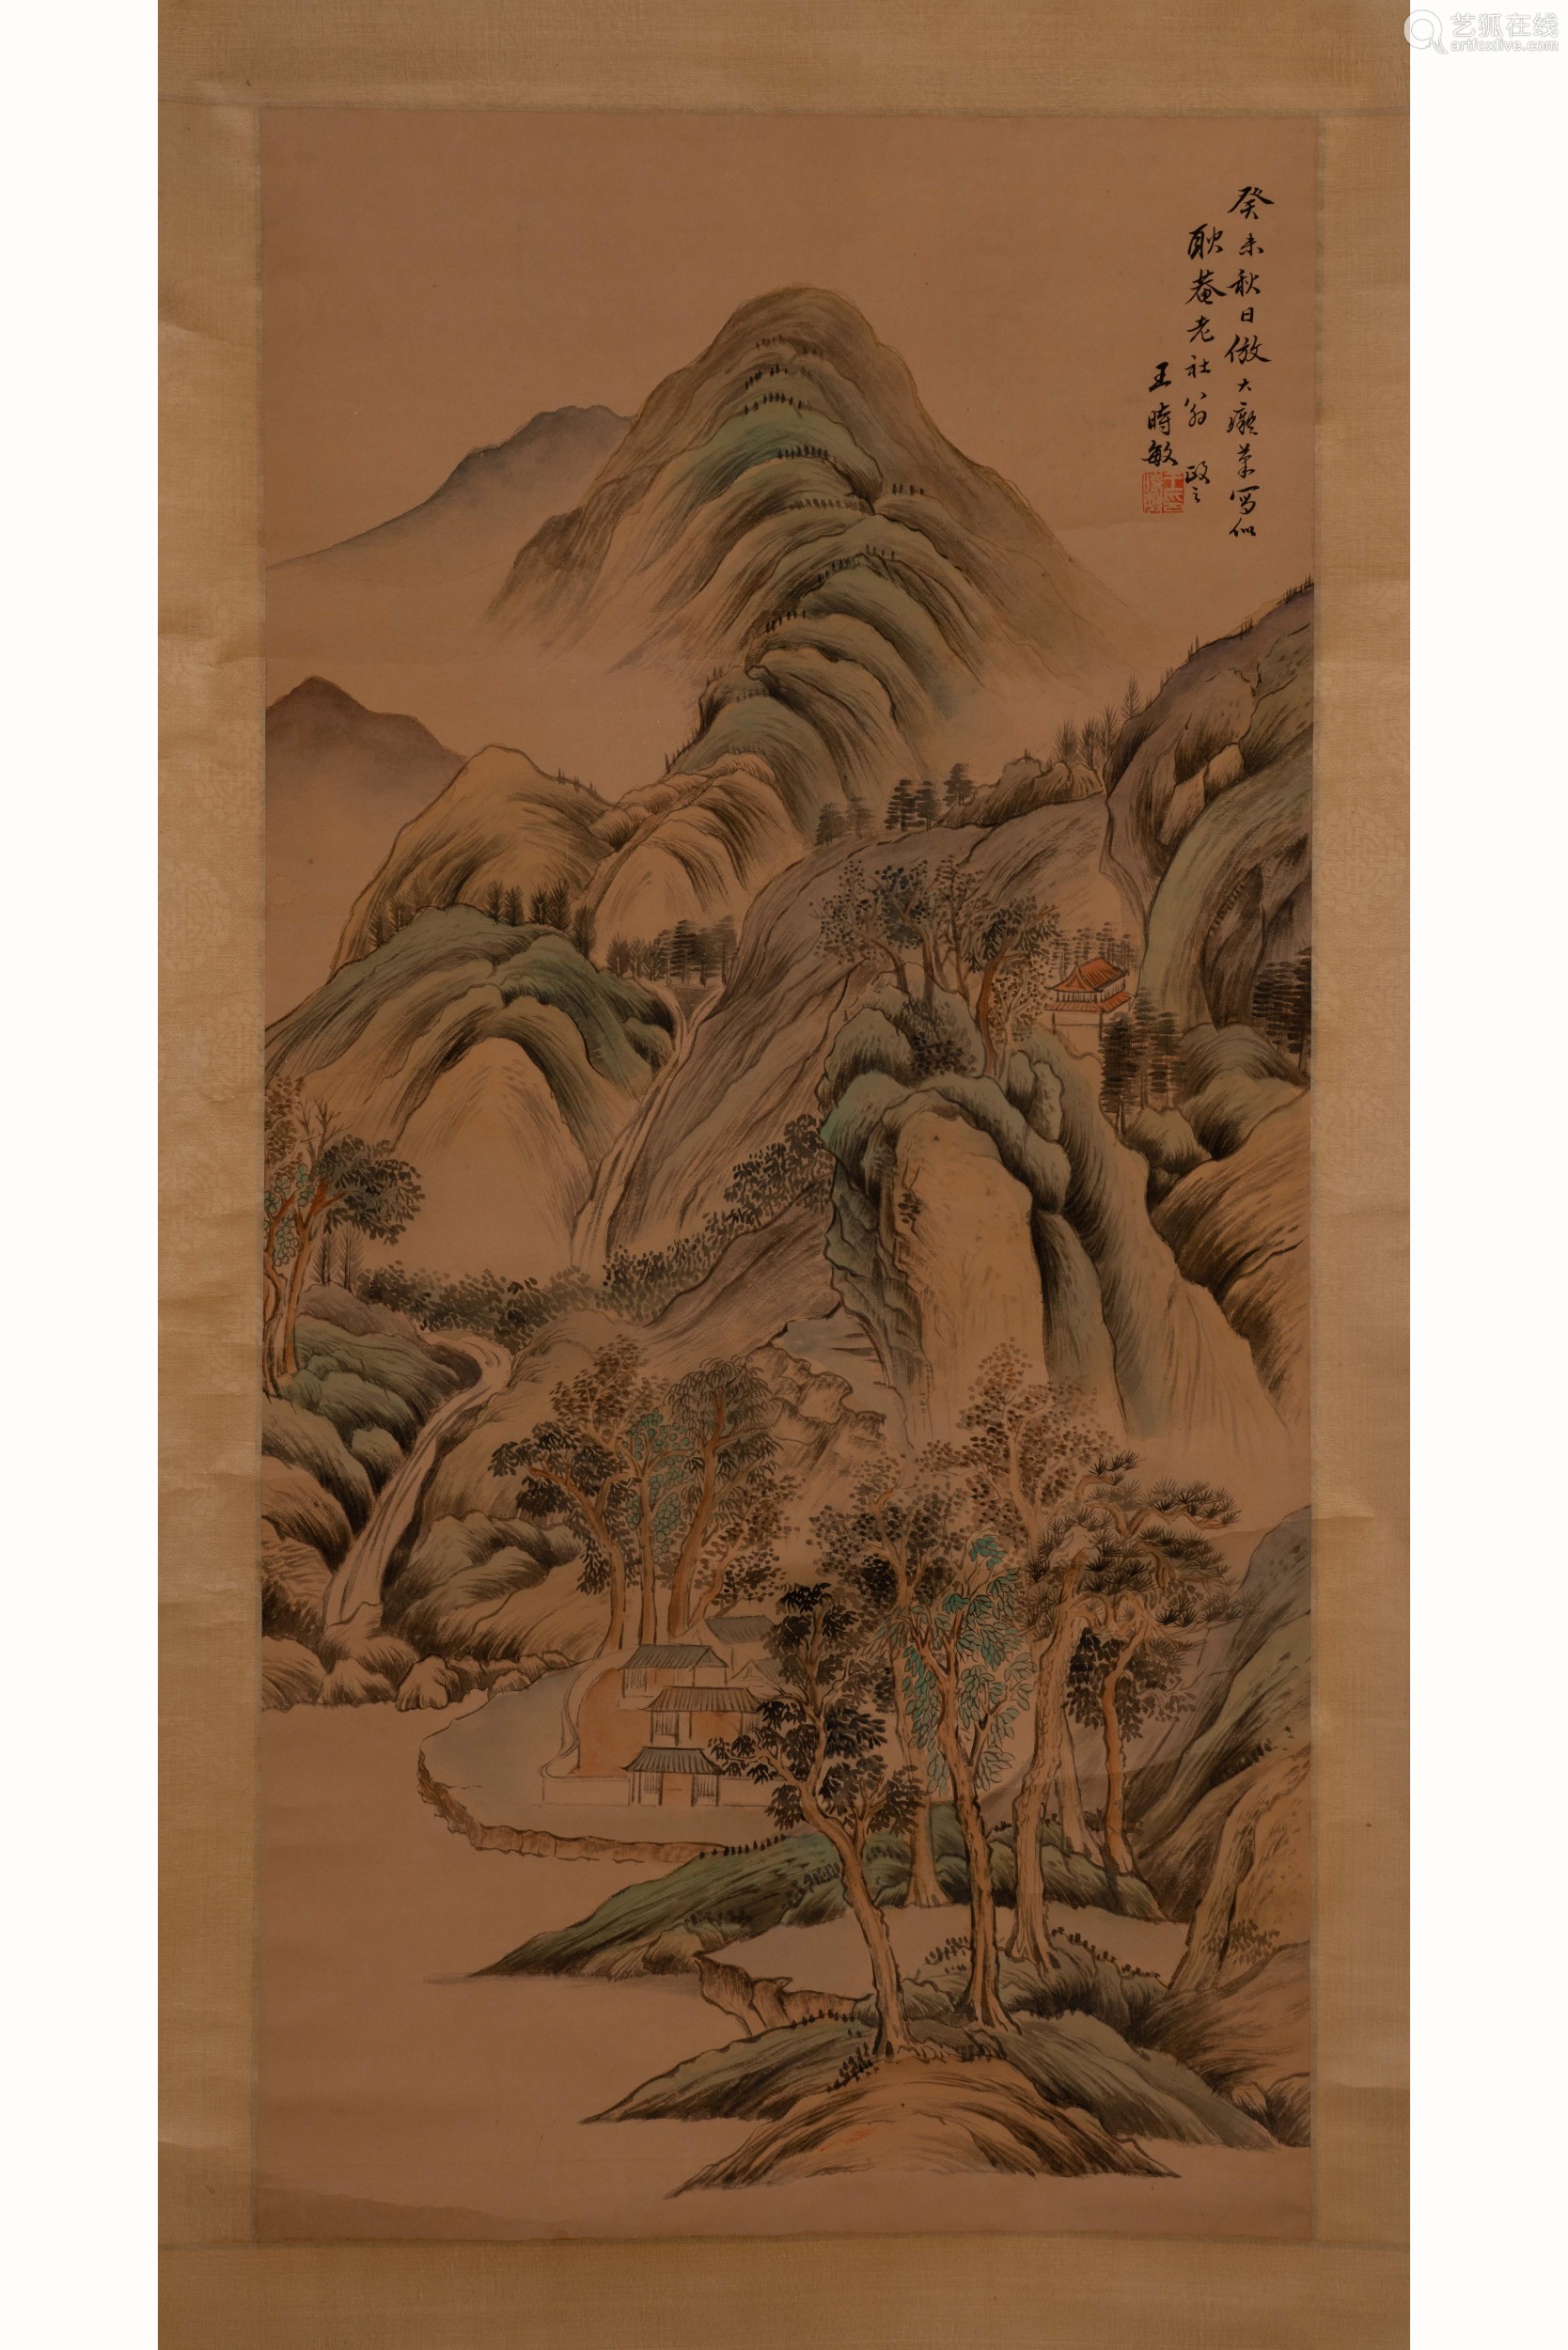 Wang Shimin's landscape vertical axis